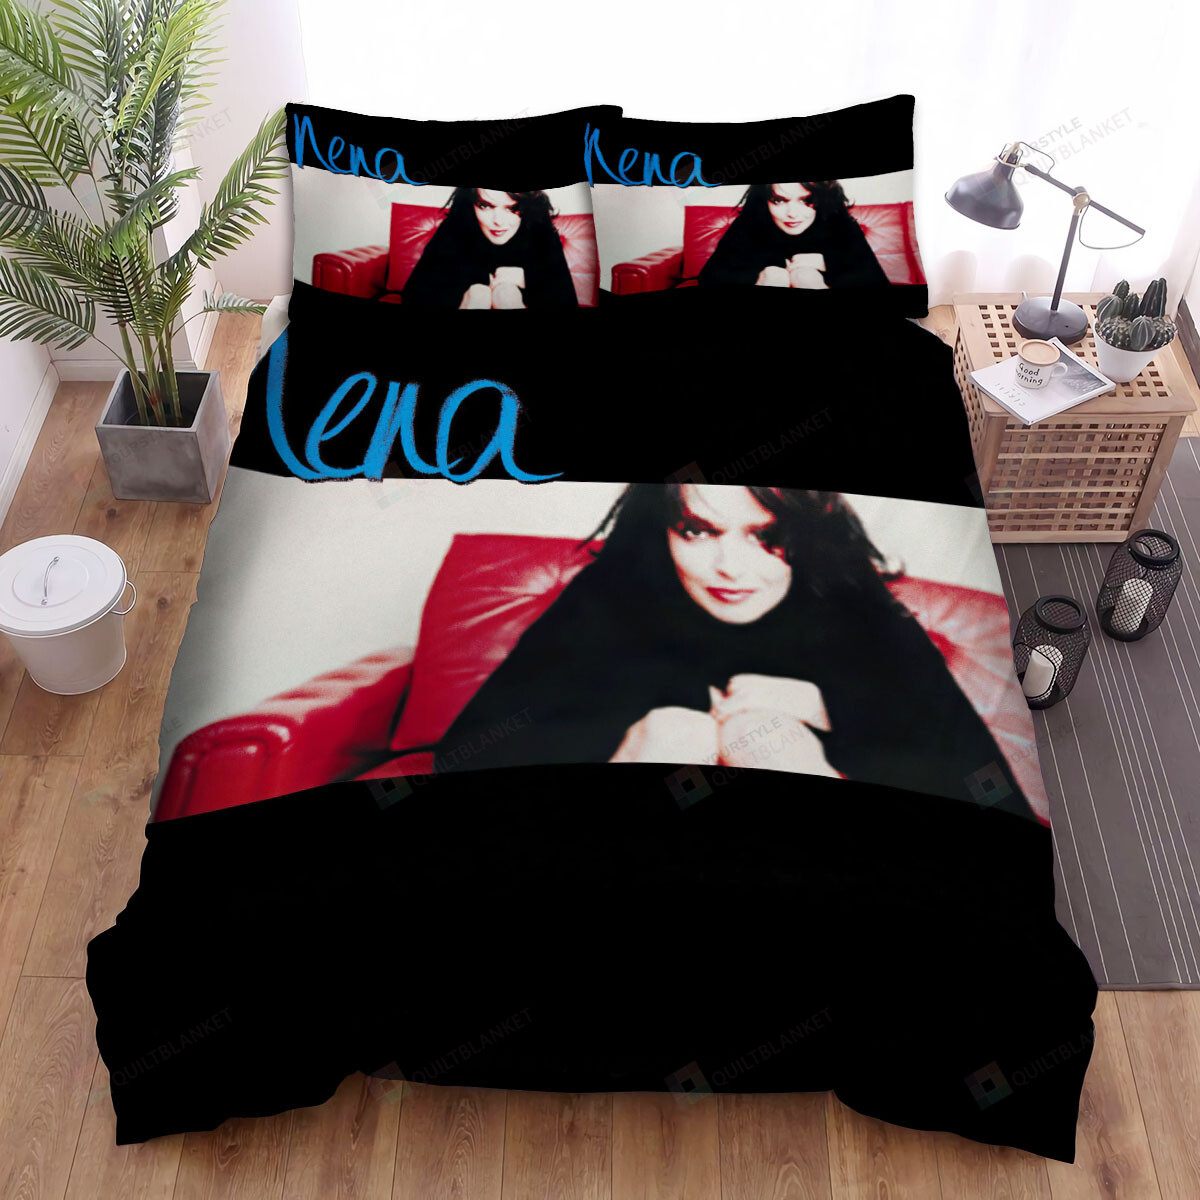 Nena Irgendwie Irgendwo Irgendwann Album Cover Bed Sheets Spread Comforter Duvet Cover Bedding Sets